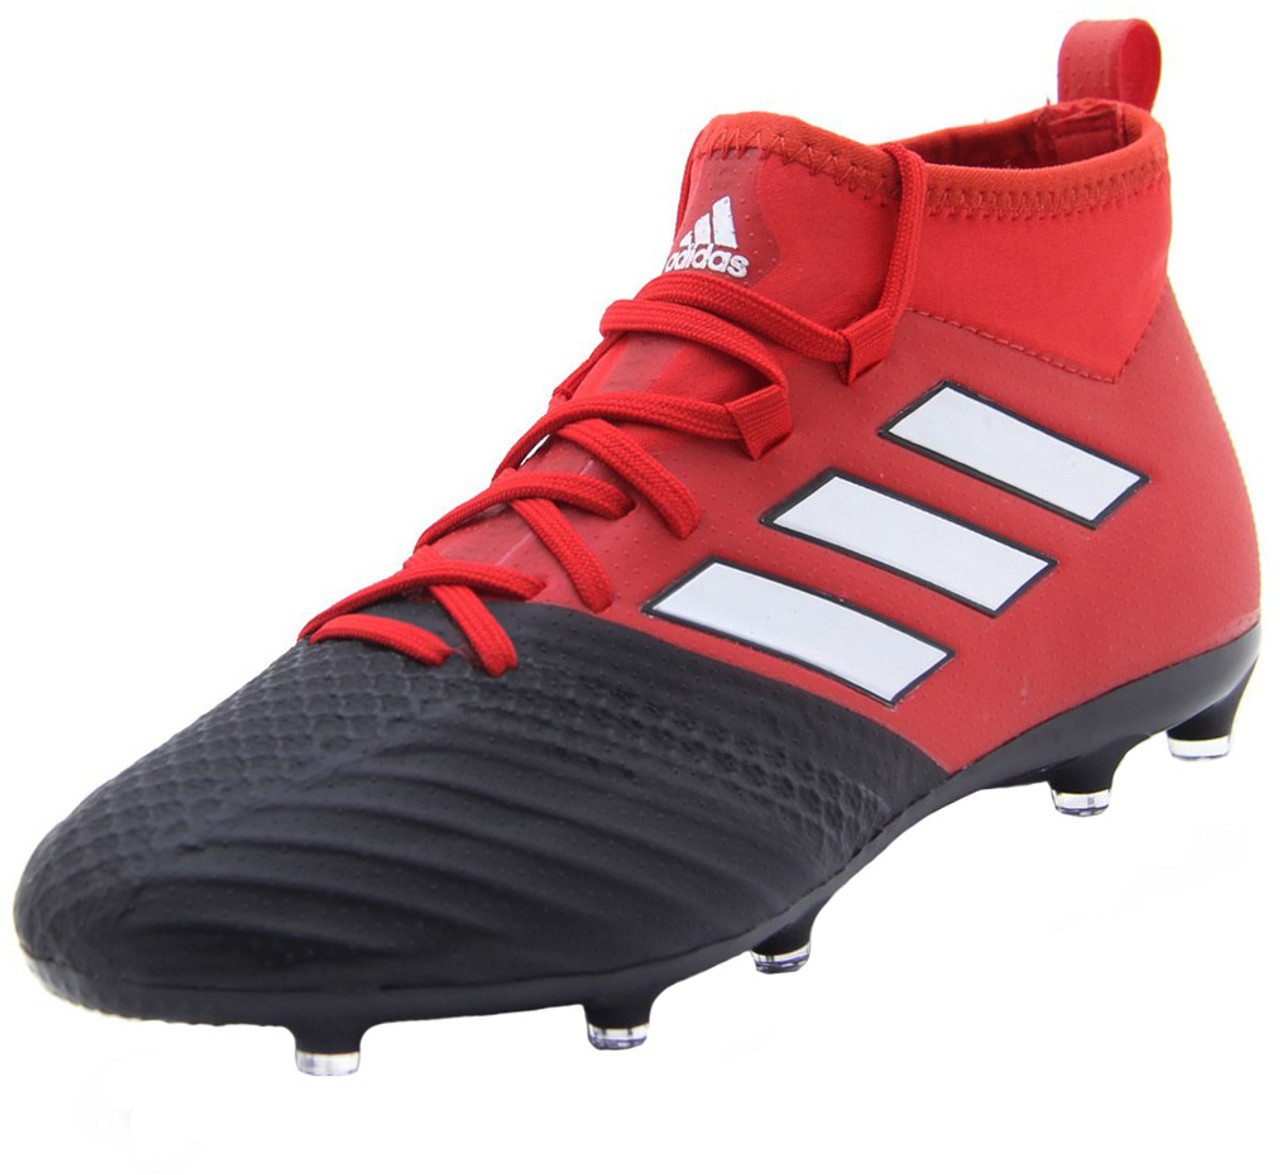 Adidas 17.1 Purecontrol Jr - Black/Red (010223) - ohp soccer